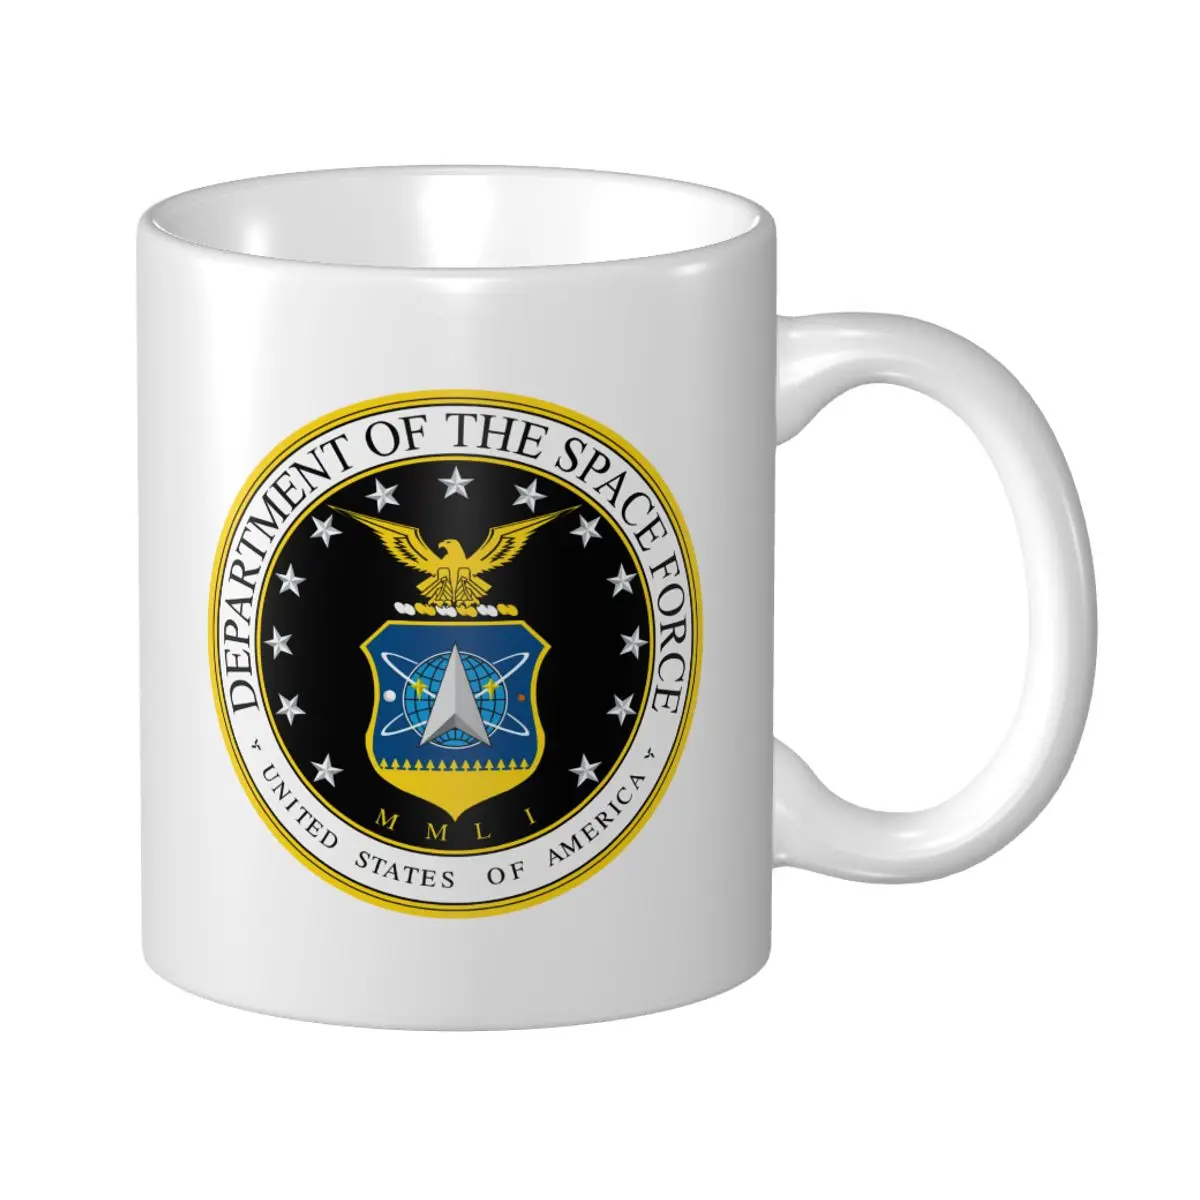 

United States Air Force Coffe Mug Solid color Mugs Personality Ceramic Mugs Eco Friendly Tea Cup 330ml (11oz)